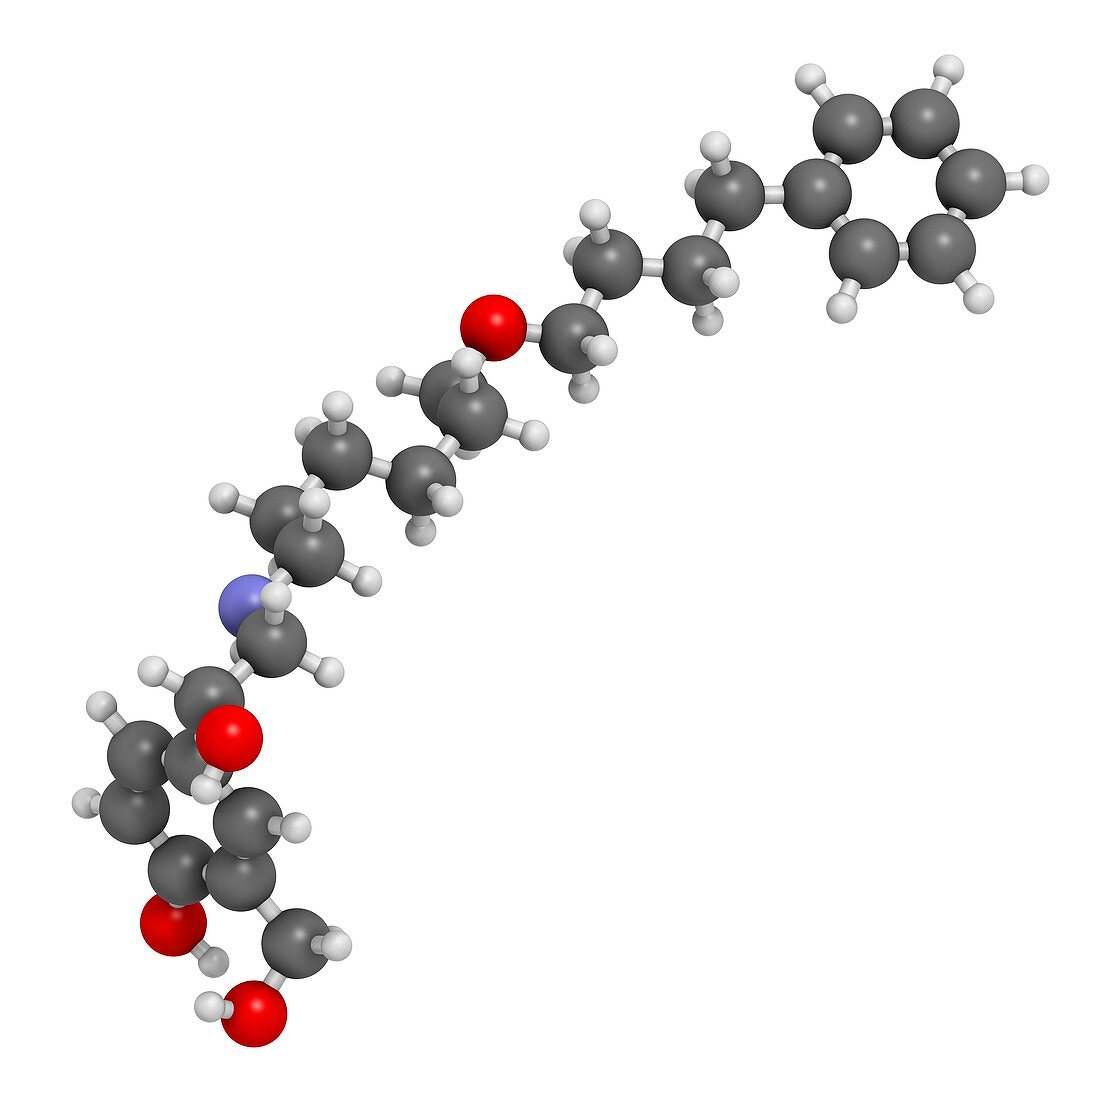 Salmeterol asthma drug molecule